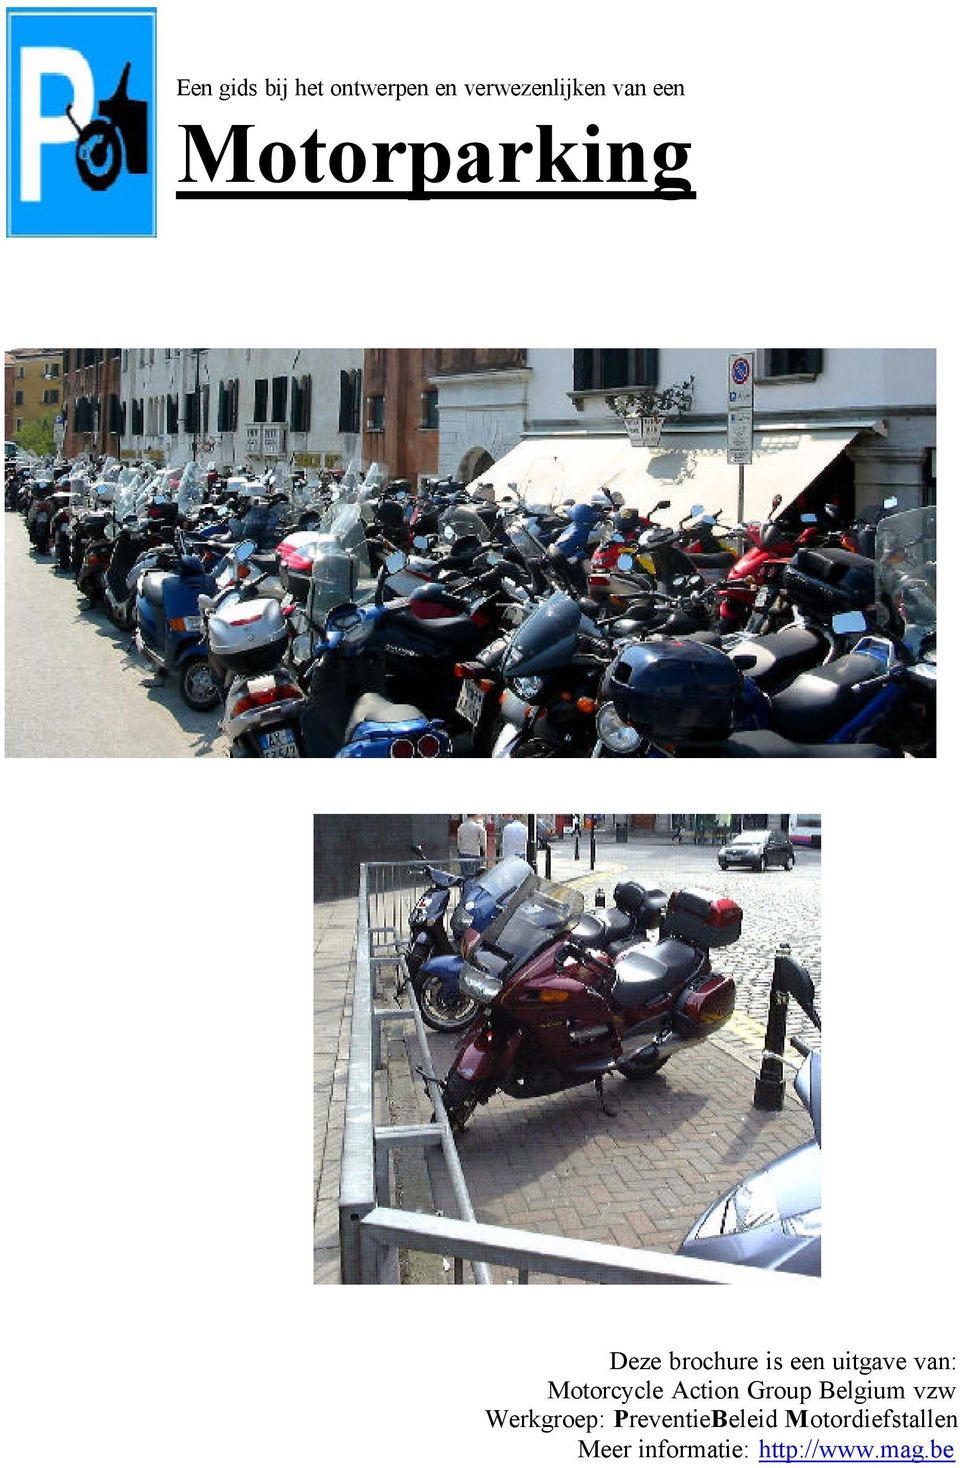 Motorcycle Action Group Belgium vzw Werkgroep: